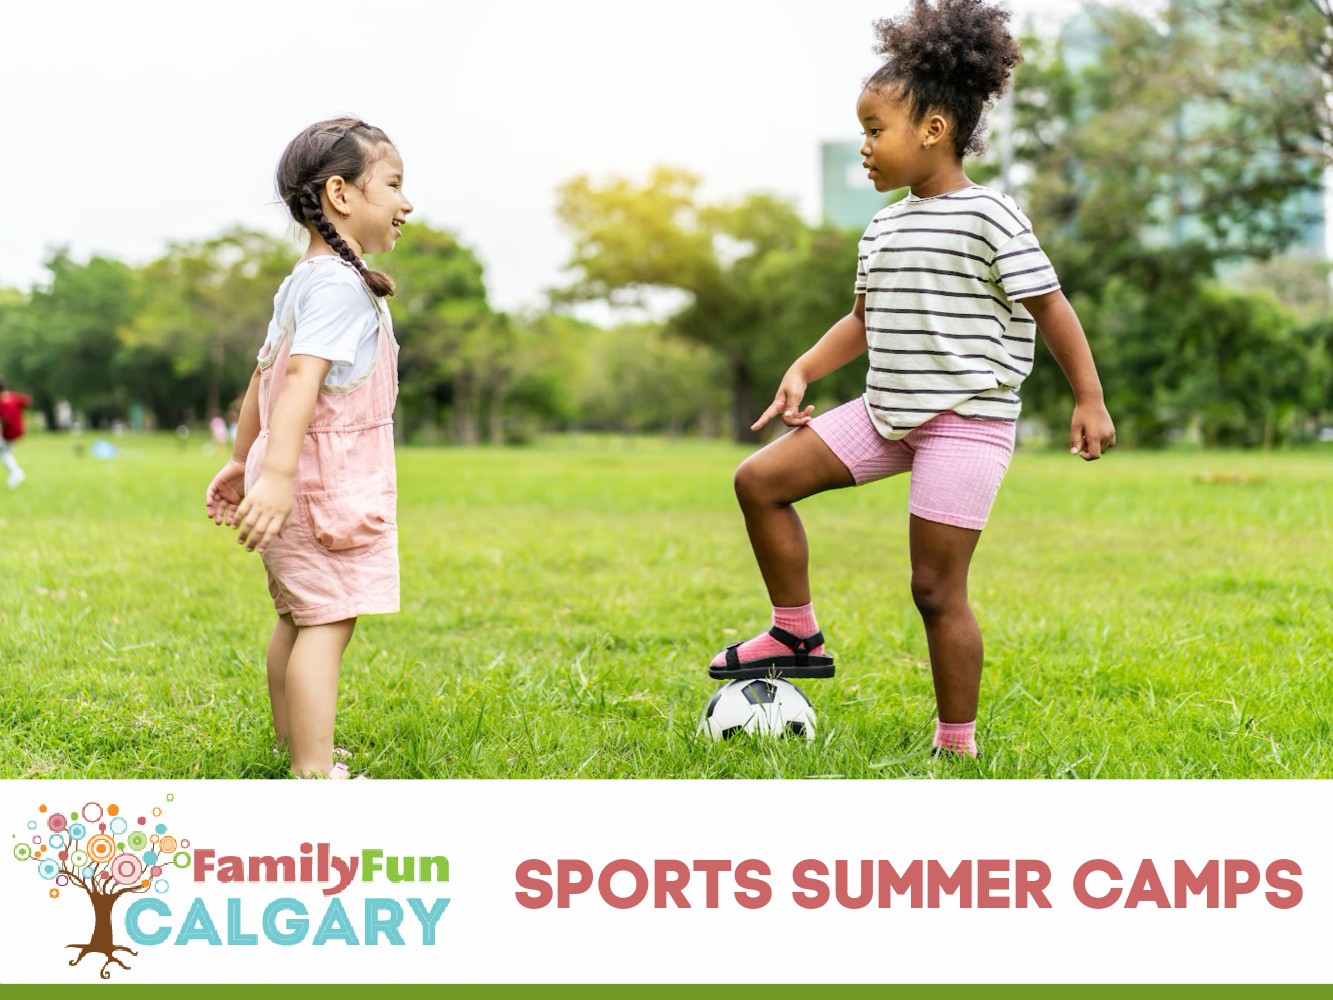 SPORTS Summer Camps (Family Fun Calgary)